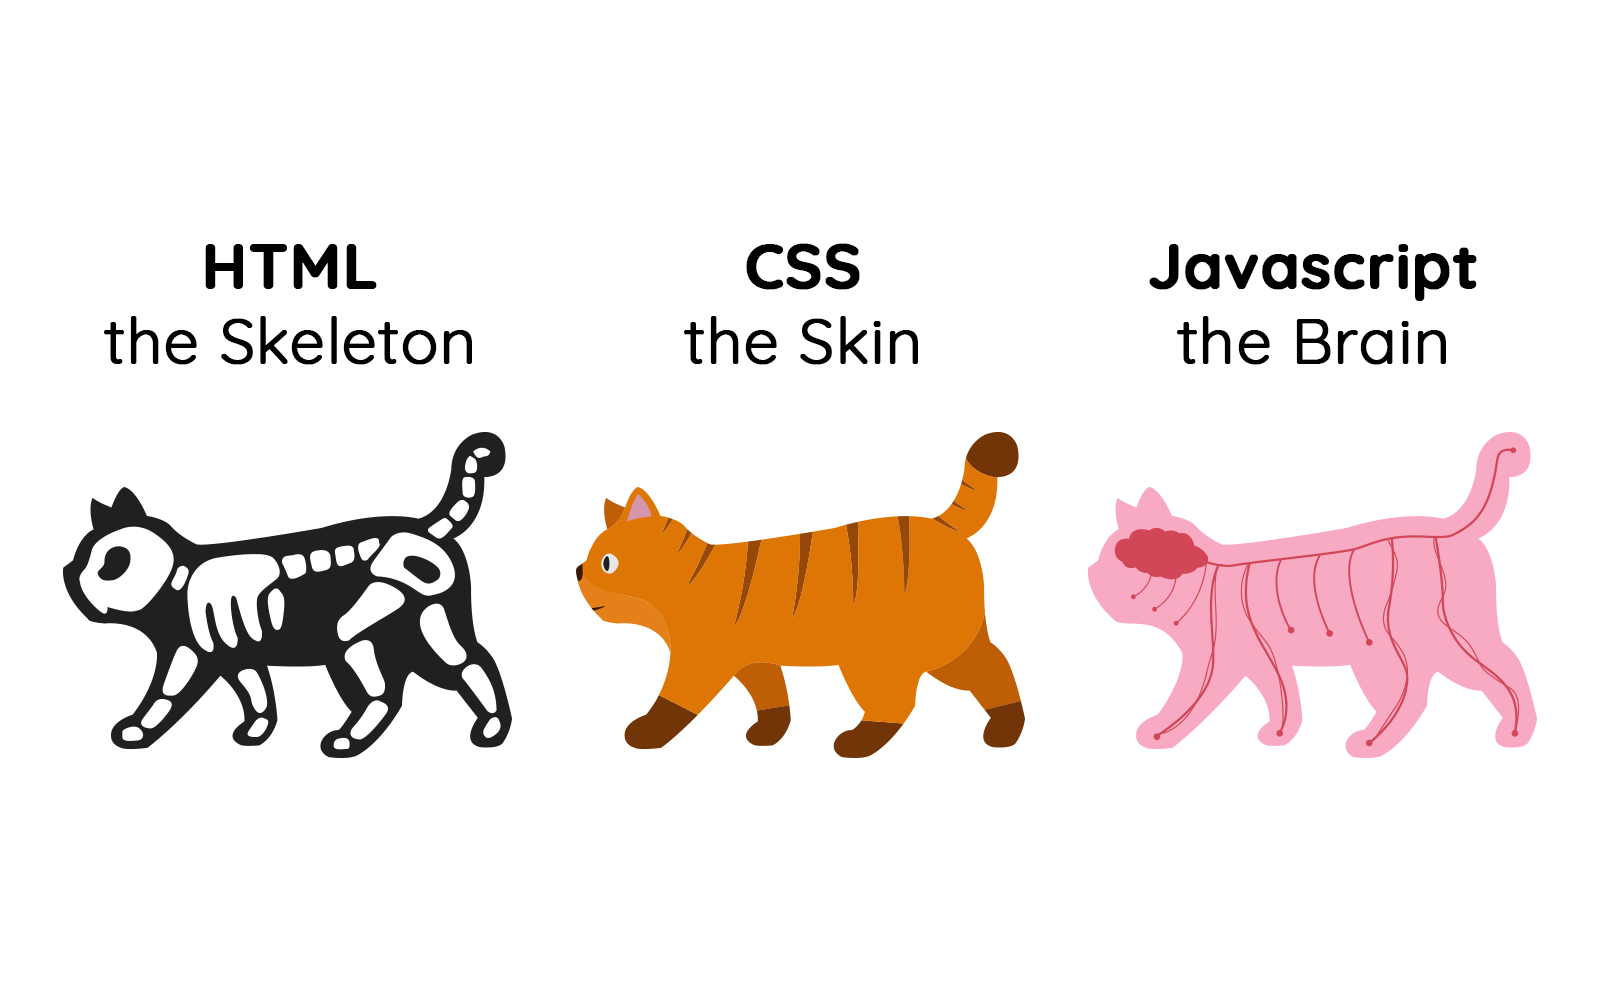 CSS sebagai kulit dari sebuah kerangka